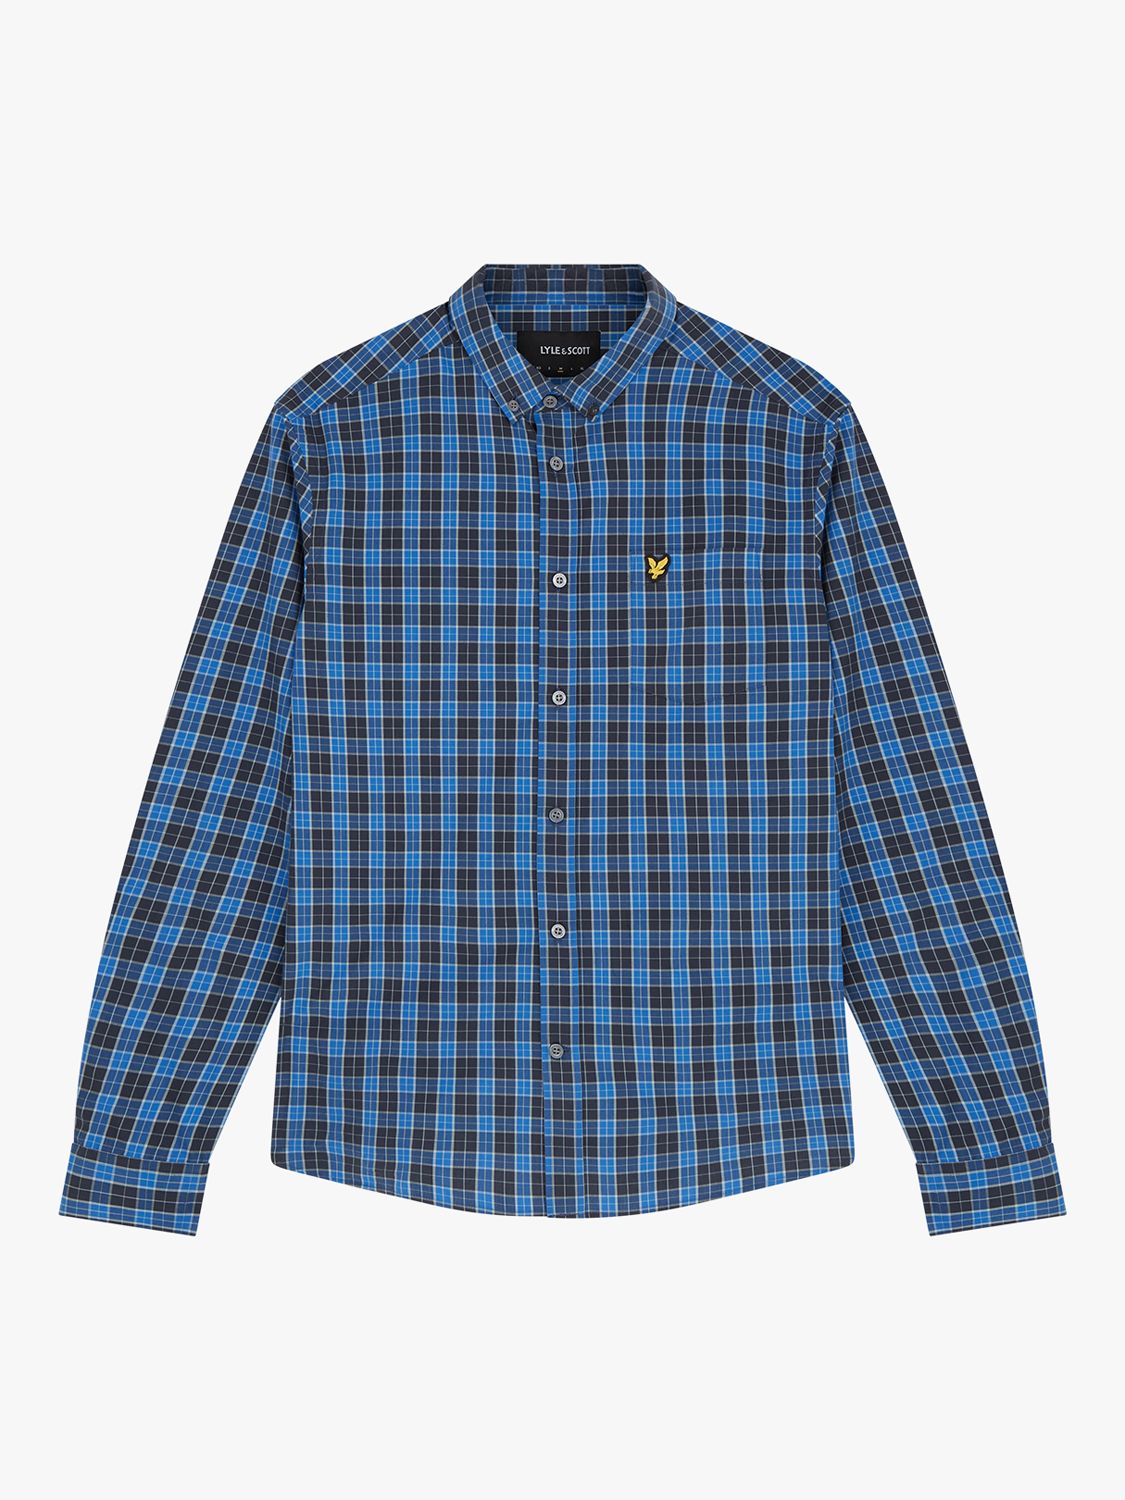 Lyle & Scott Cotton Poplin Check Shirt, W804 Navy/Blue, XL